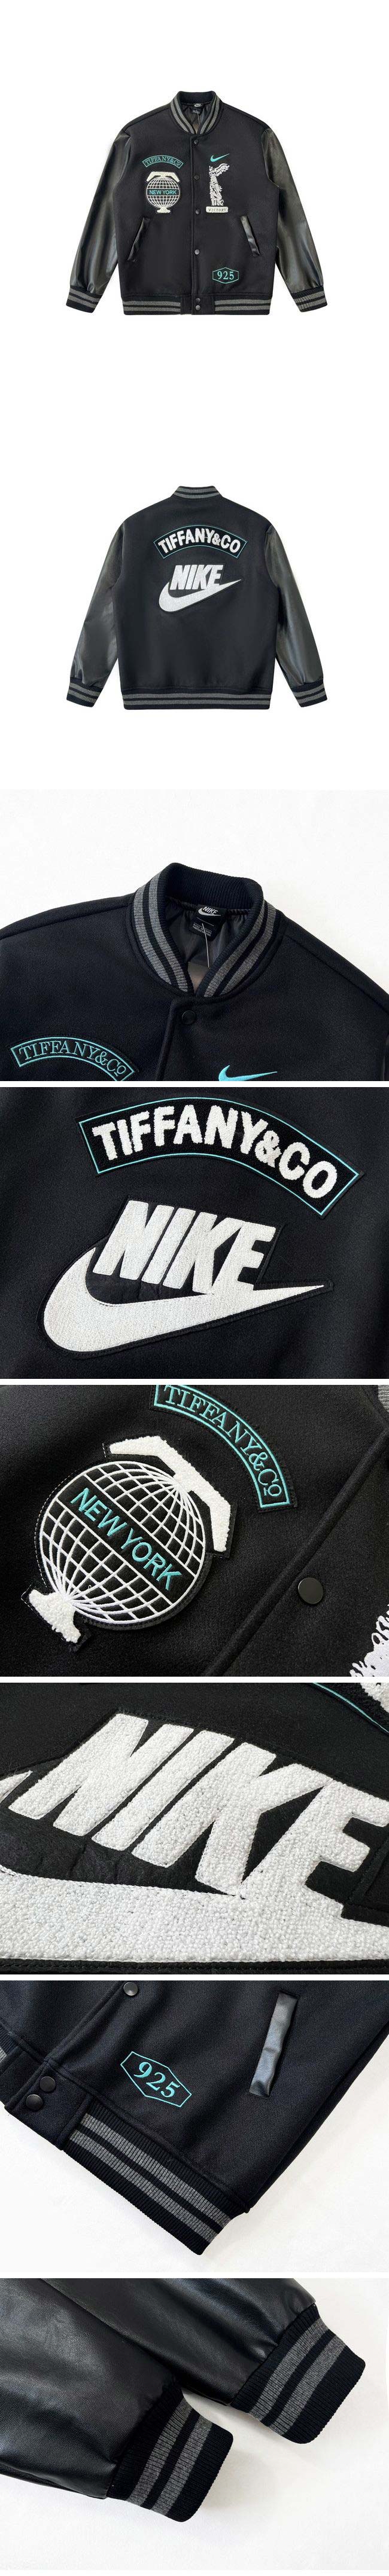 Nike x Tiffany & Co Jacket ナイキ x ティファニー コラボ ジャケット